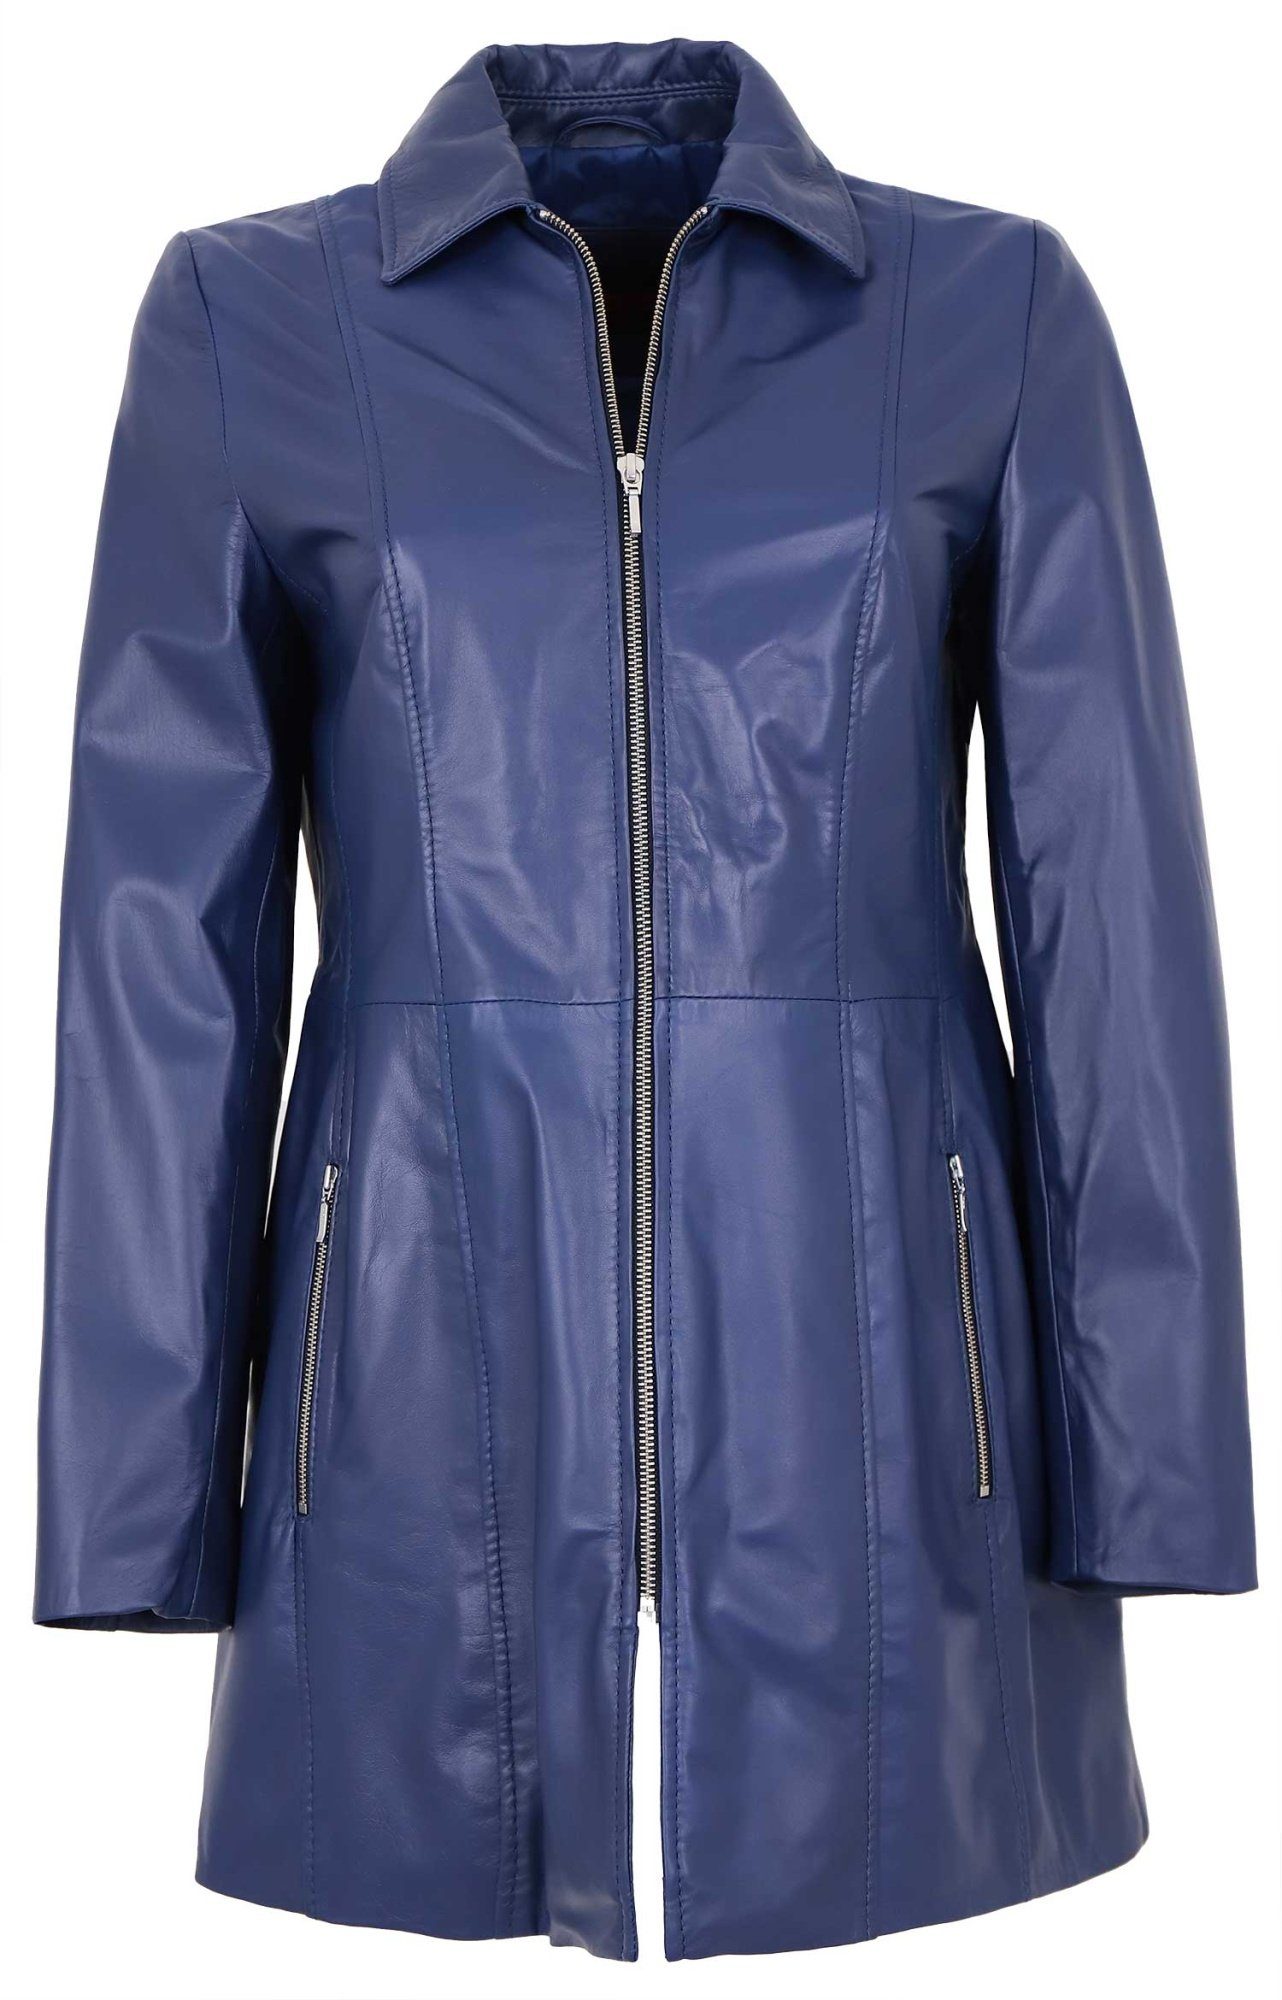 Damen Lederjacke in blau online kaufen | OTTO